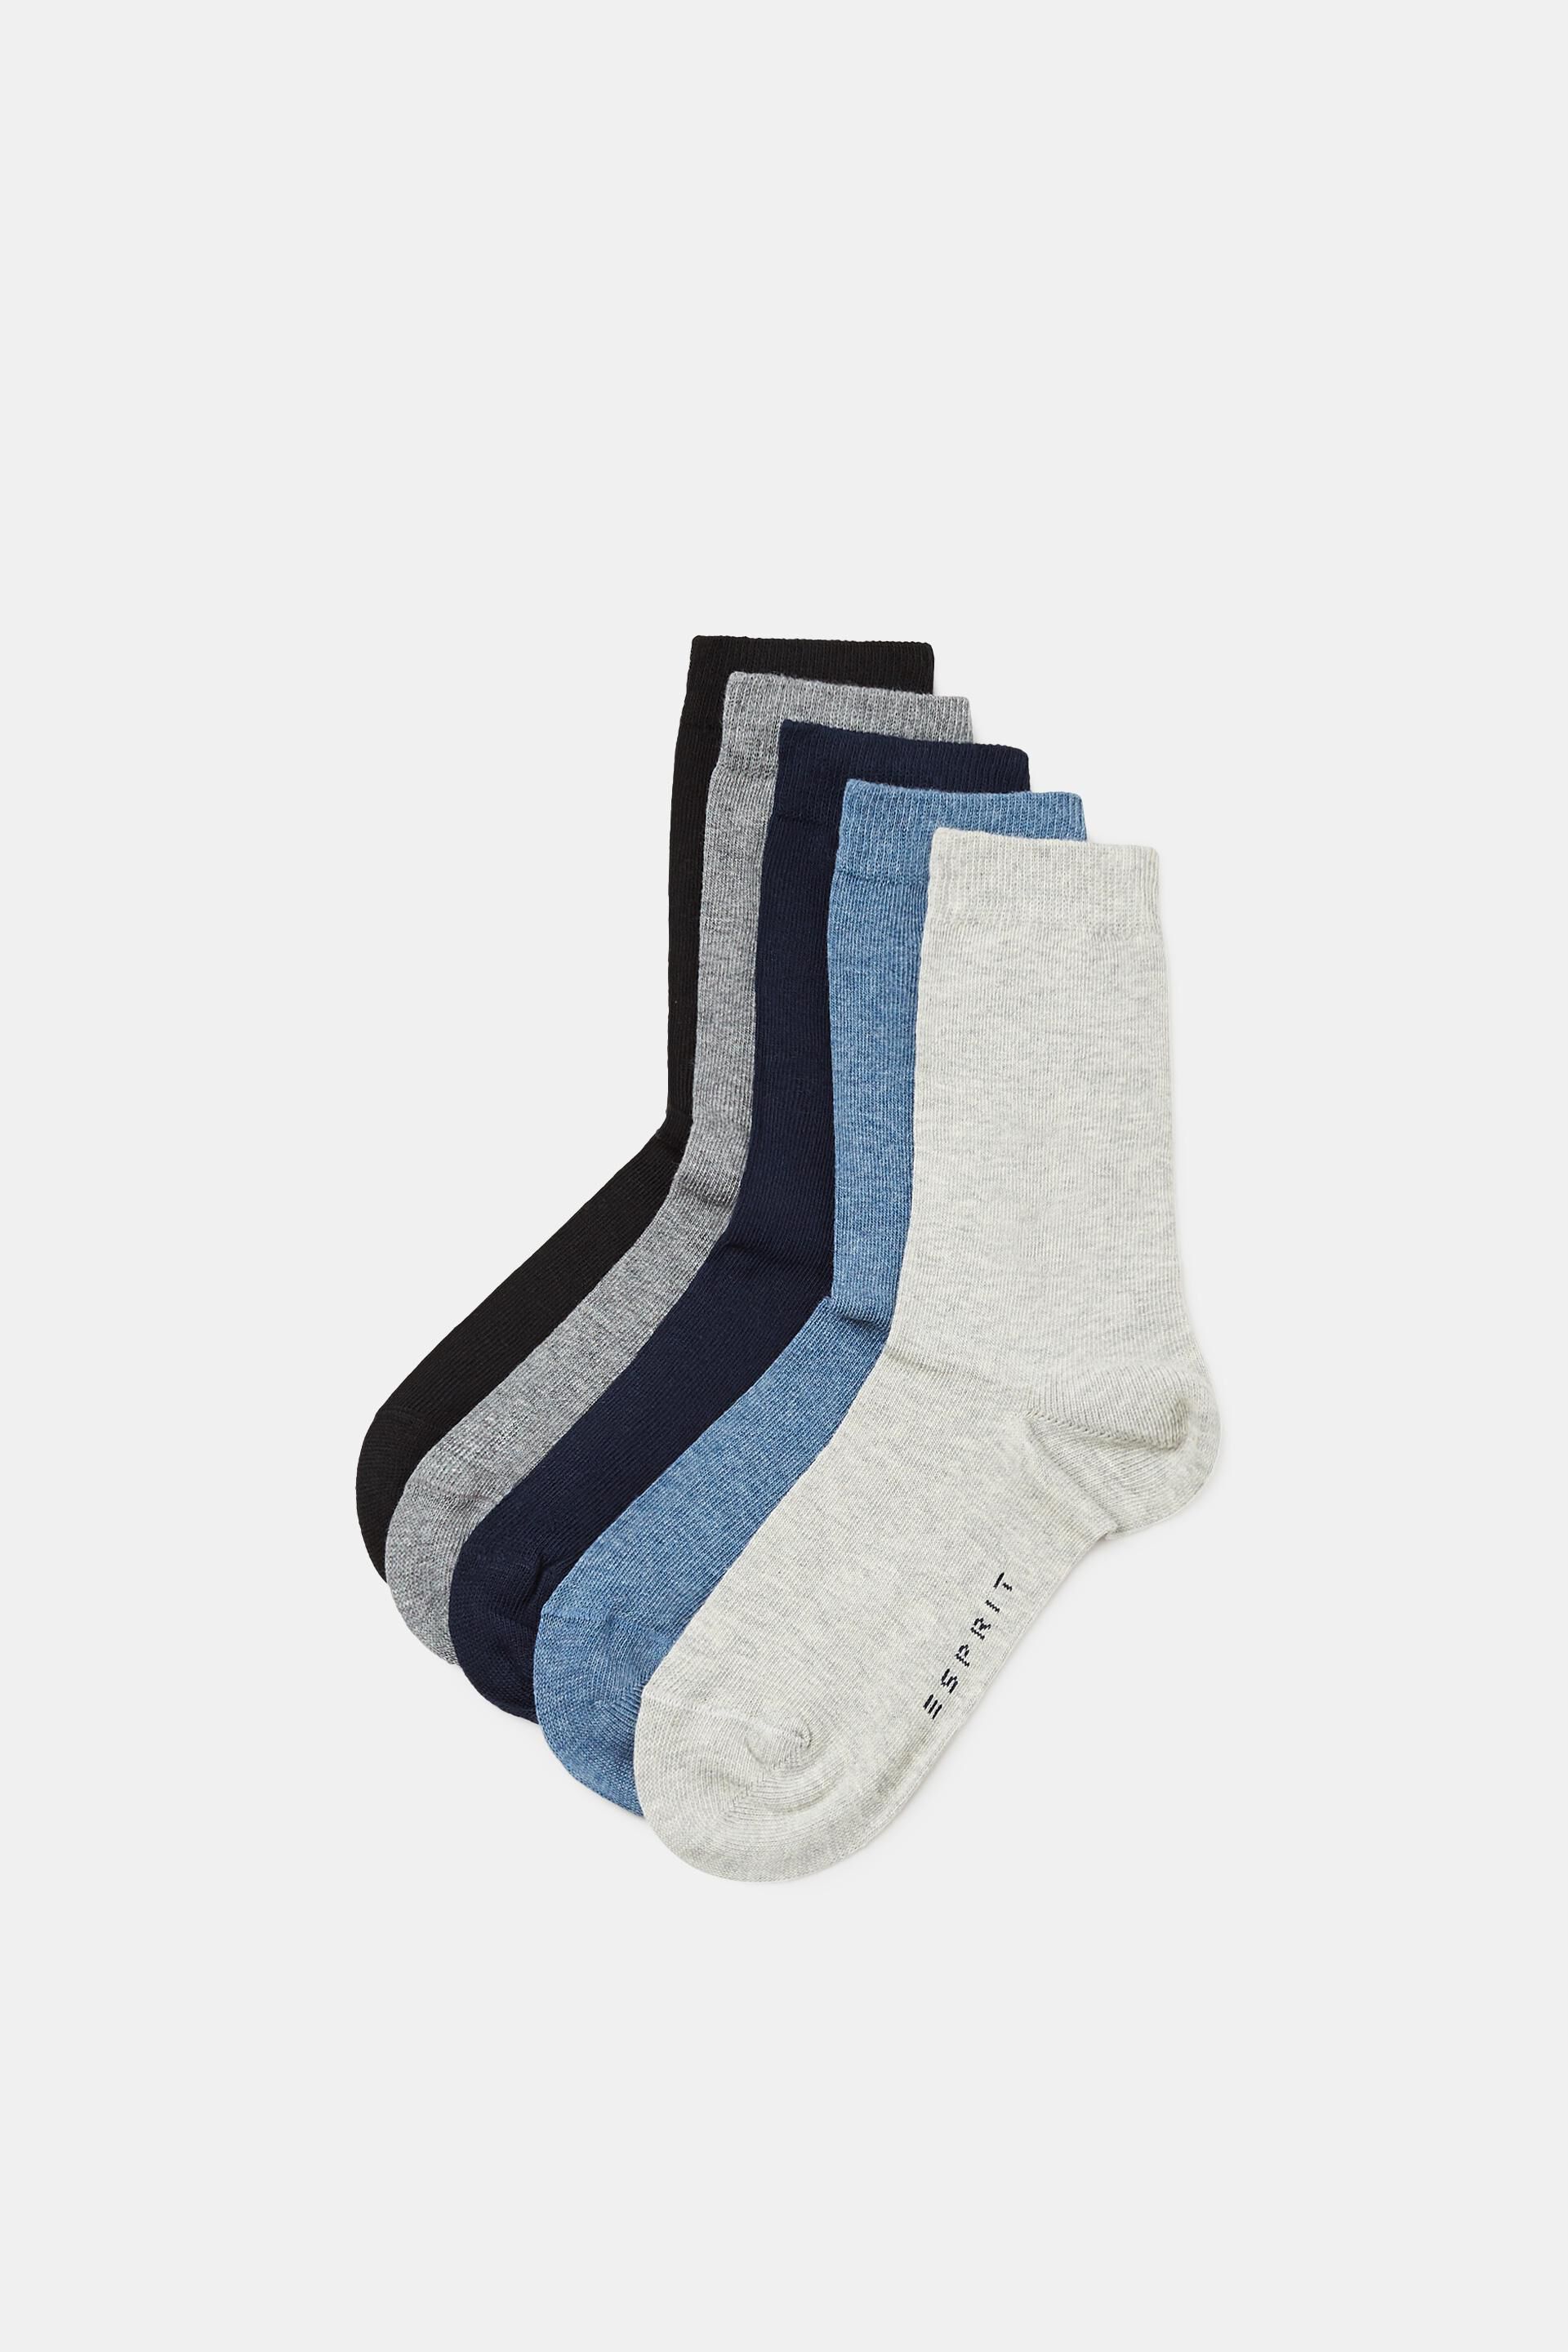 Esprit socks Five pack of plain-coloured